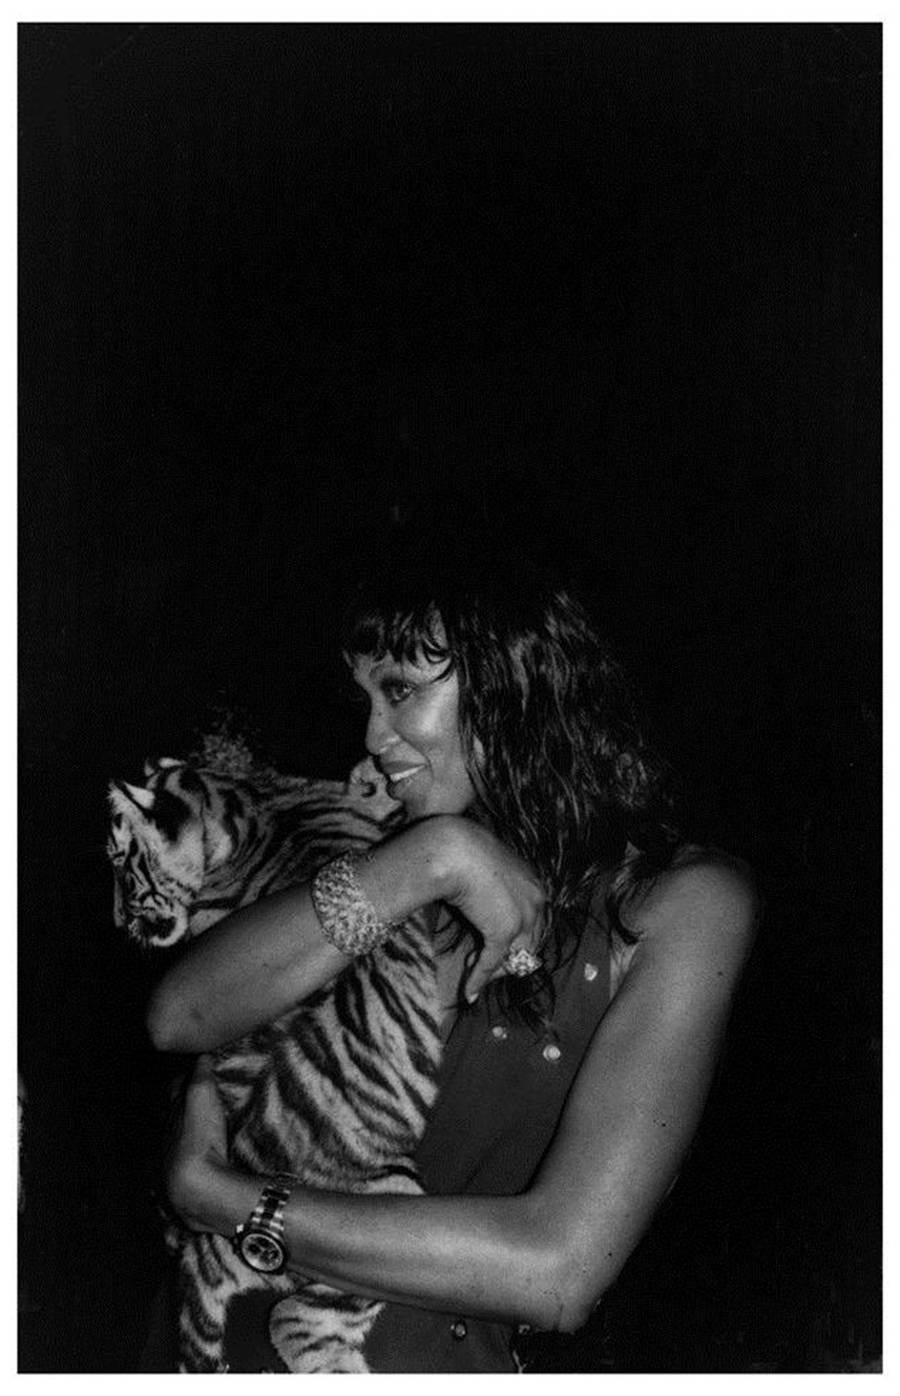 Jamie Hince Black and White Photograph – Naomi Campbell, Naomi Campbell